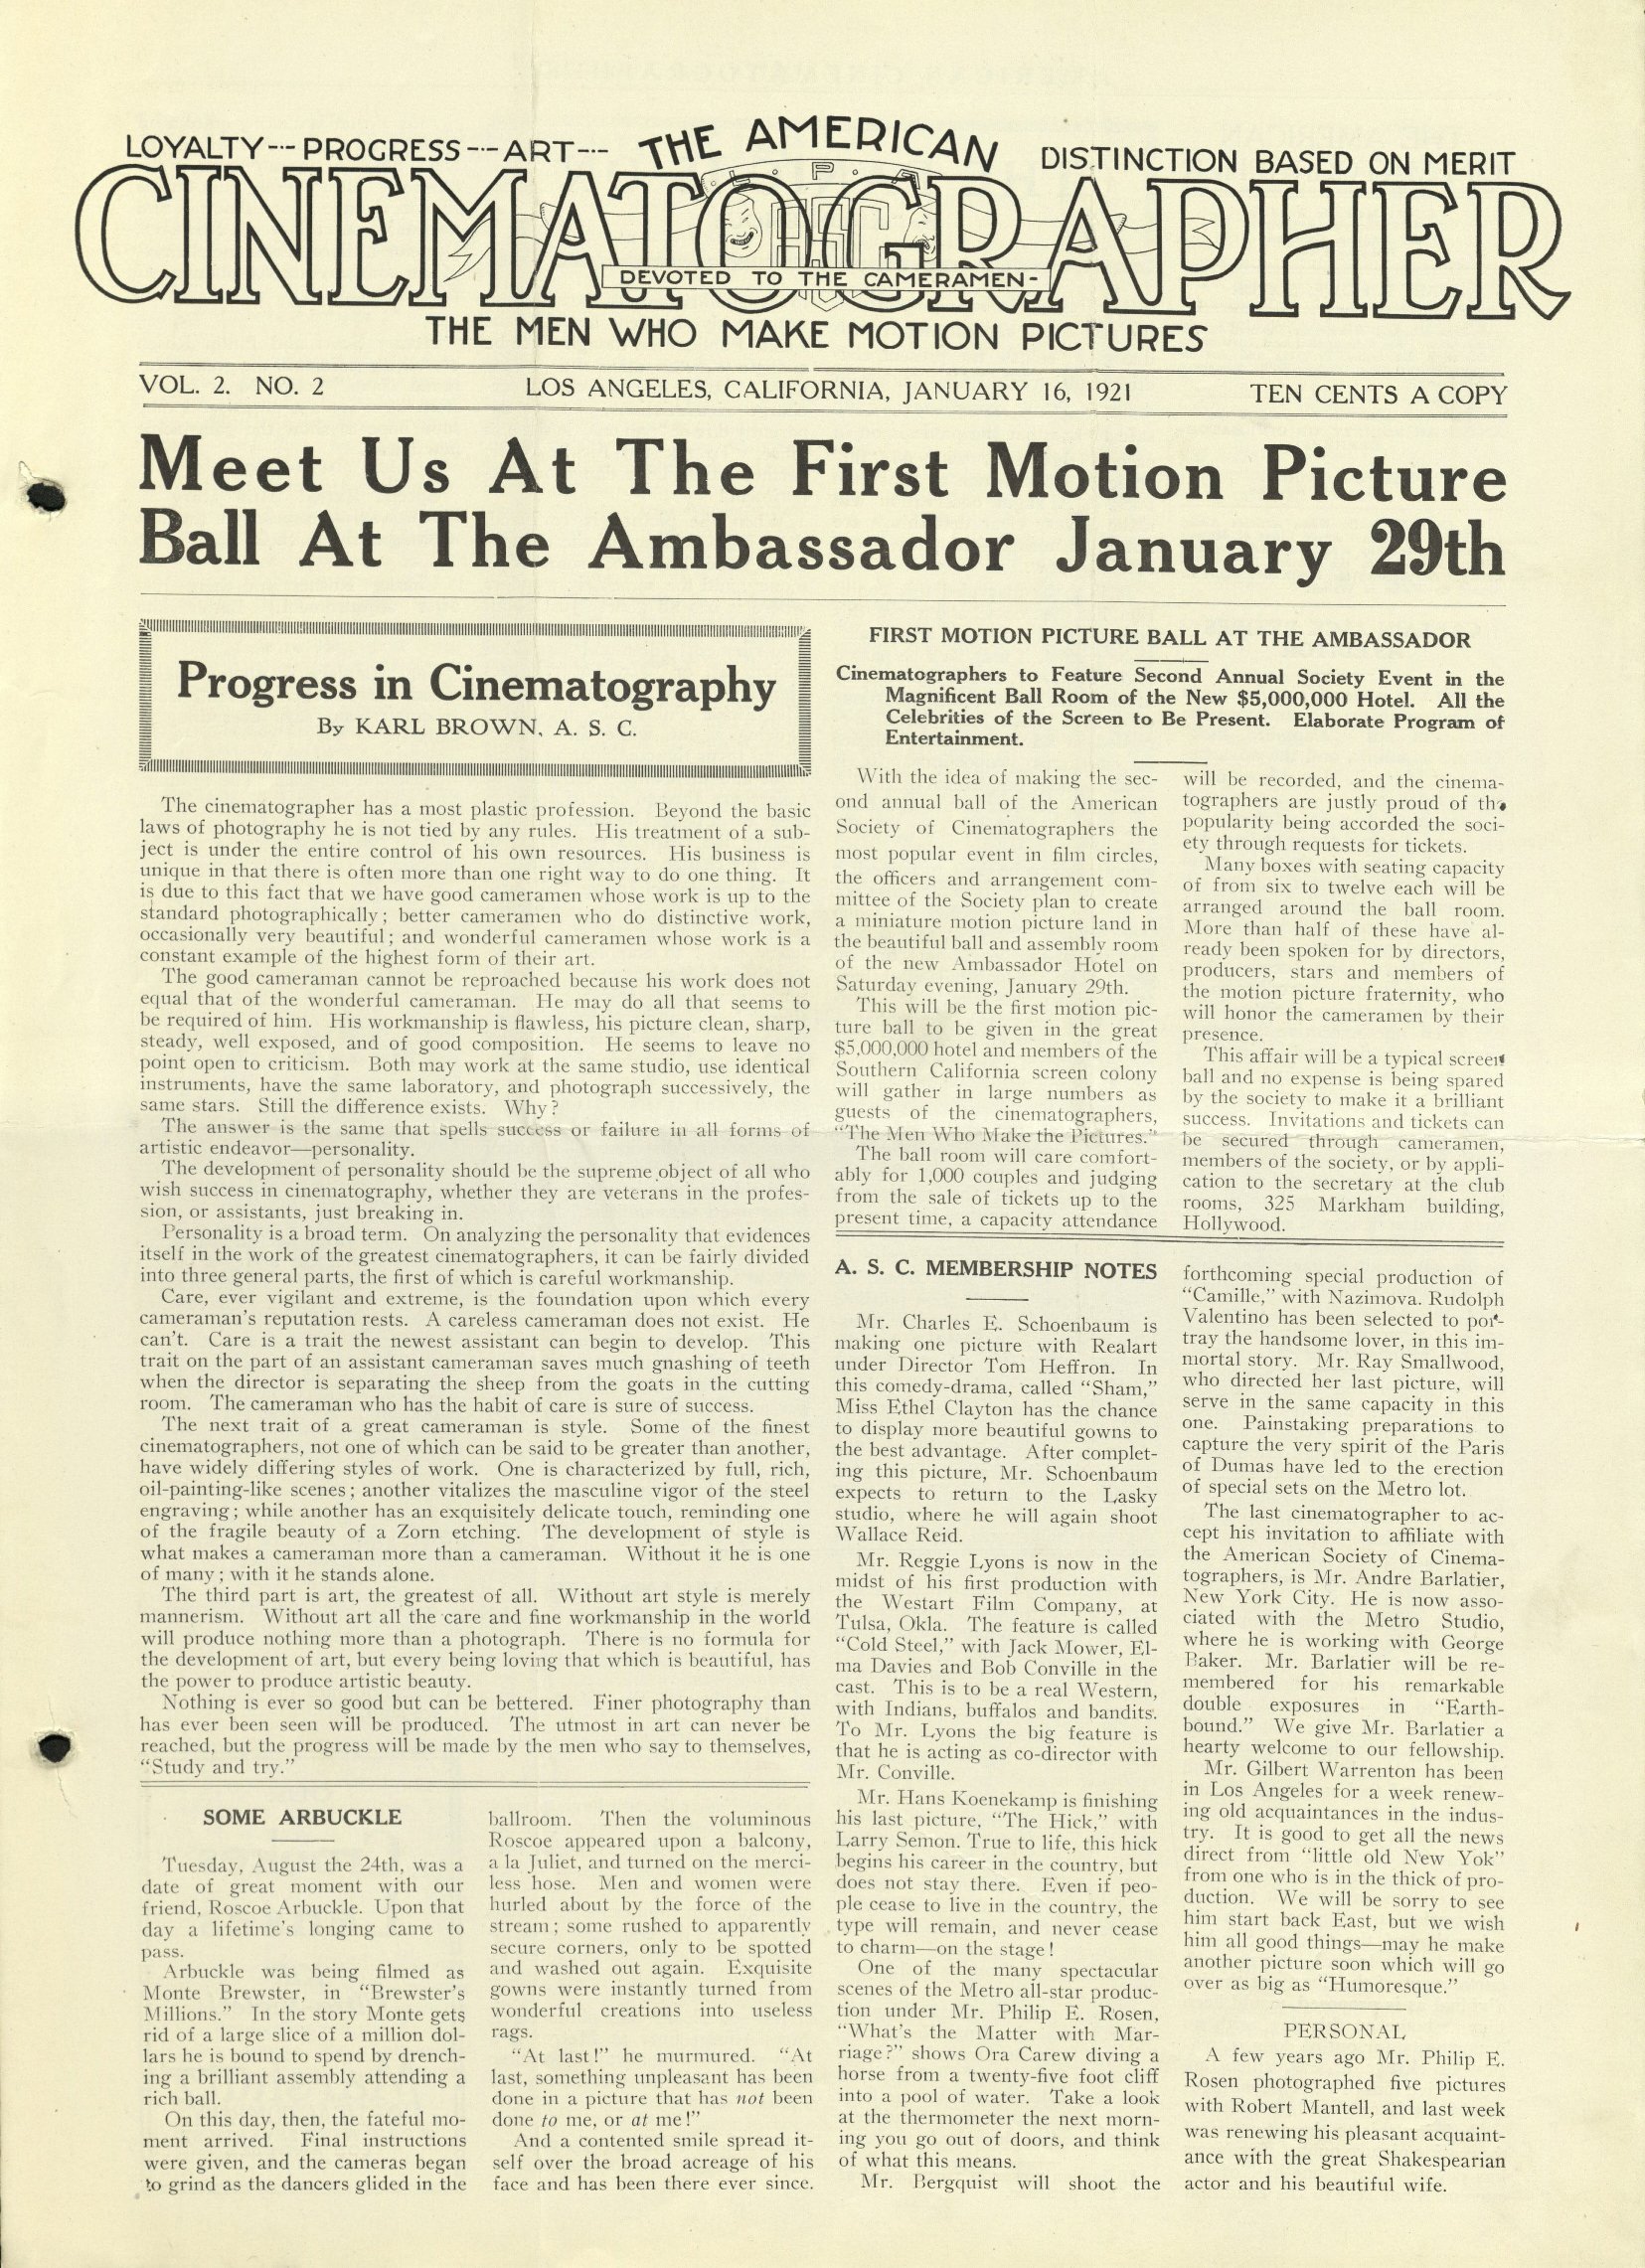 January 16, 1921